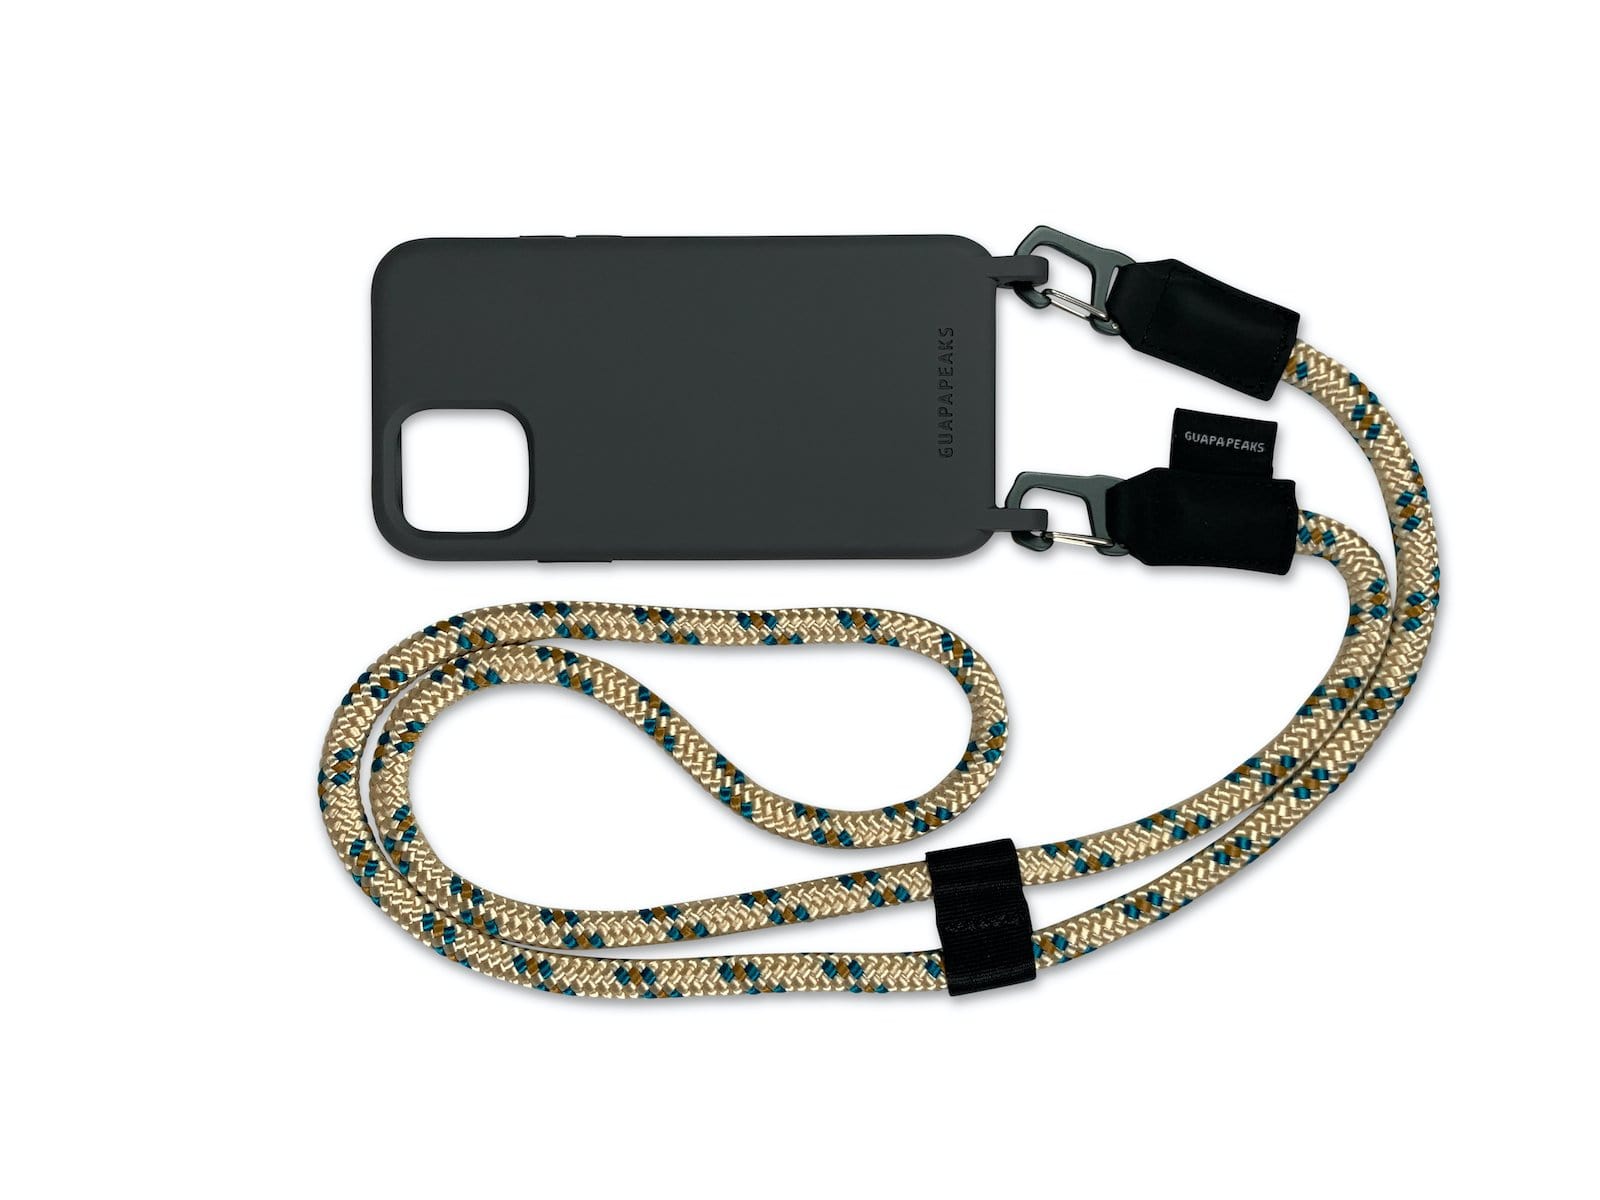 Desert - Phone & Camera Utility Strap